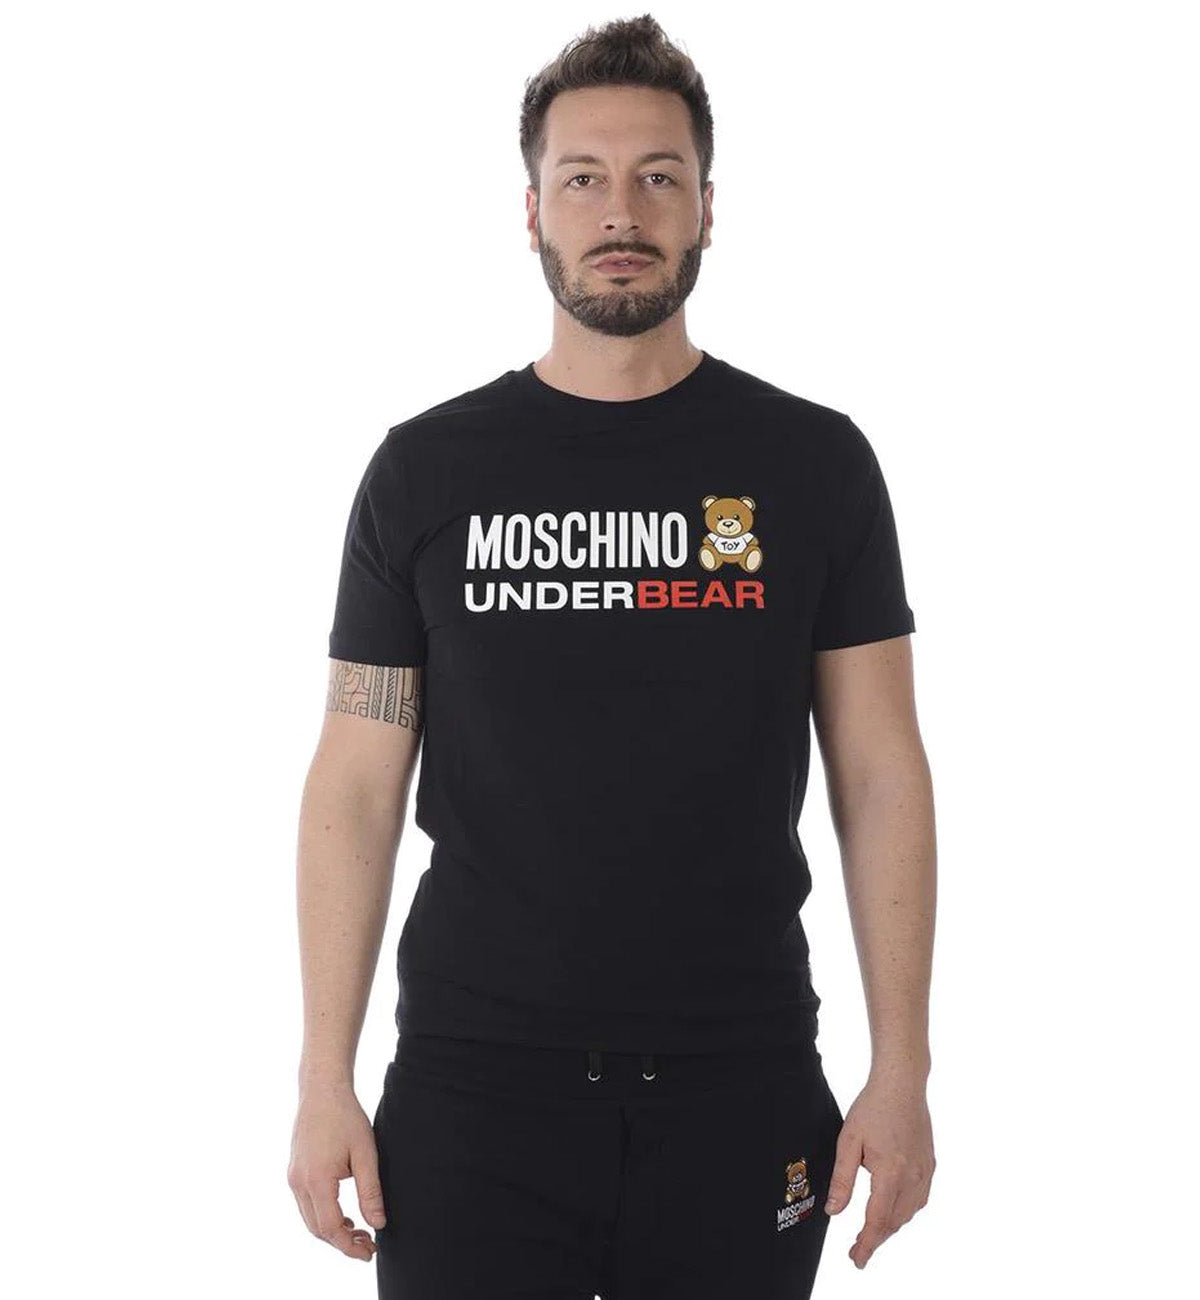 Moschino Underbear T-Shirt